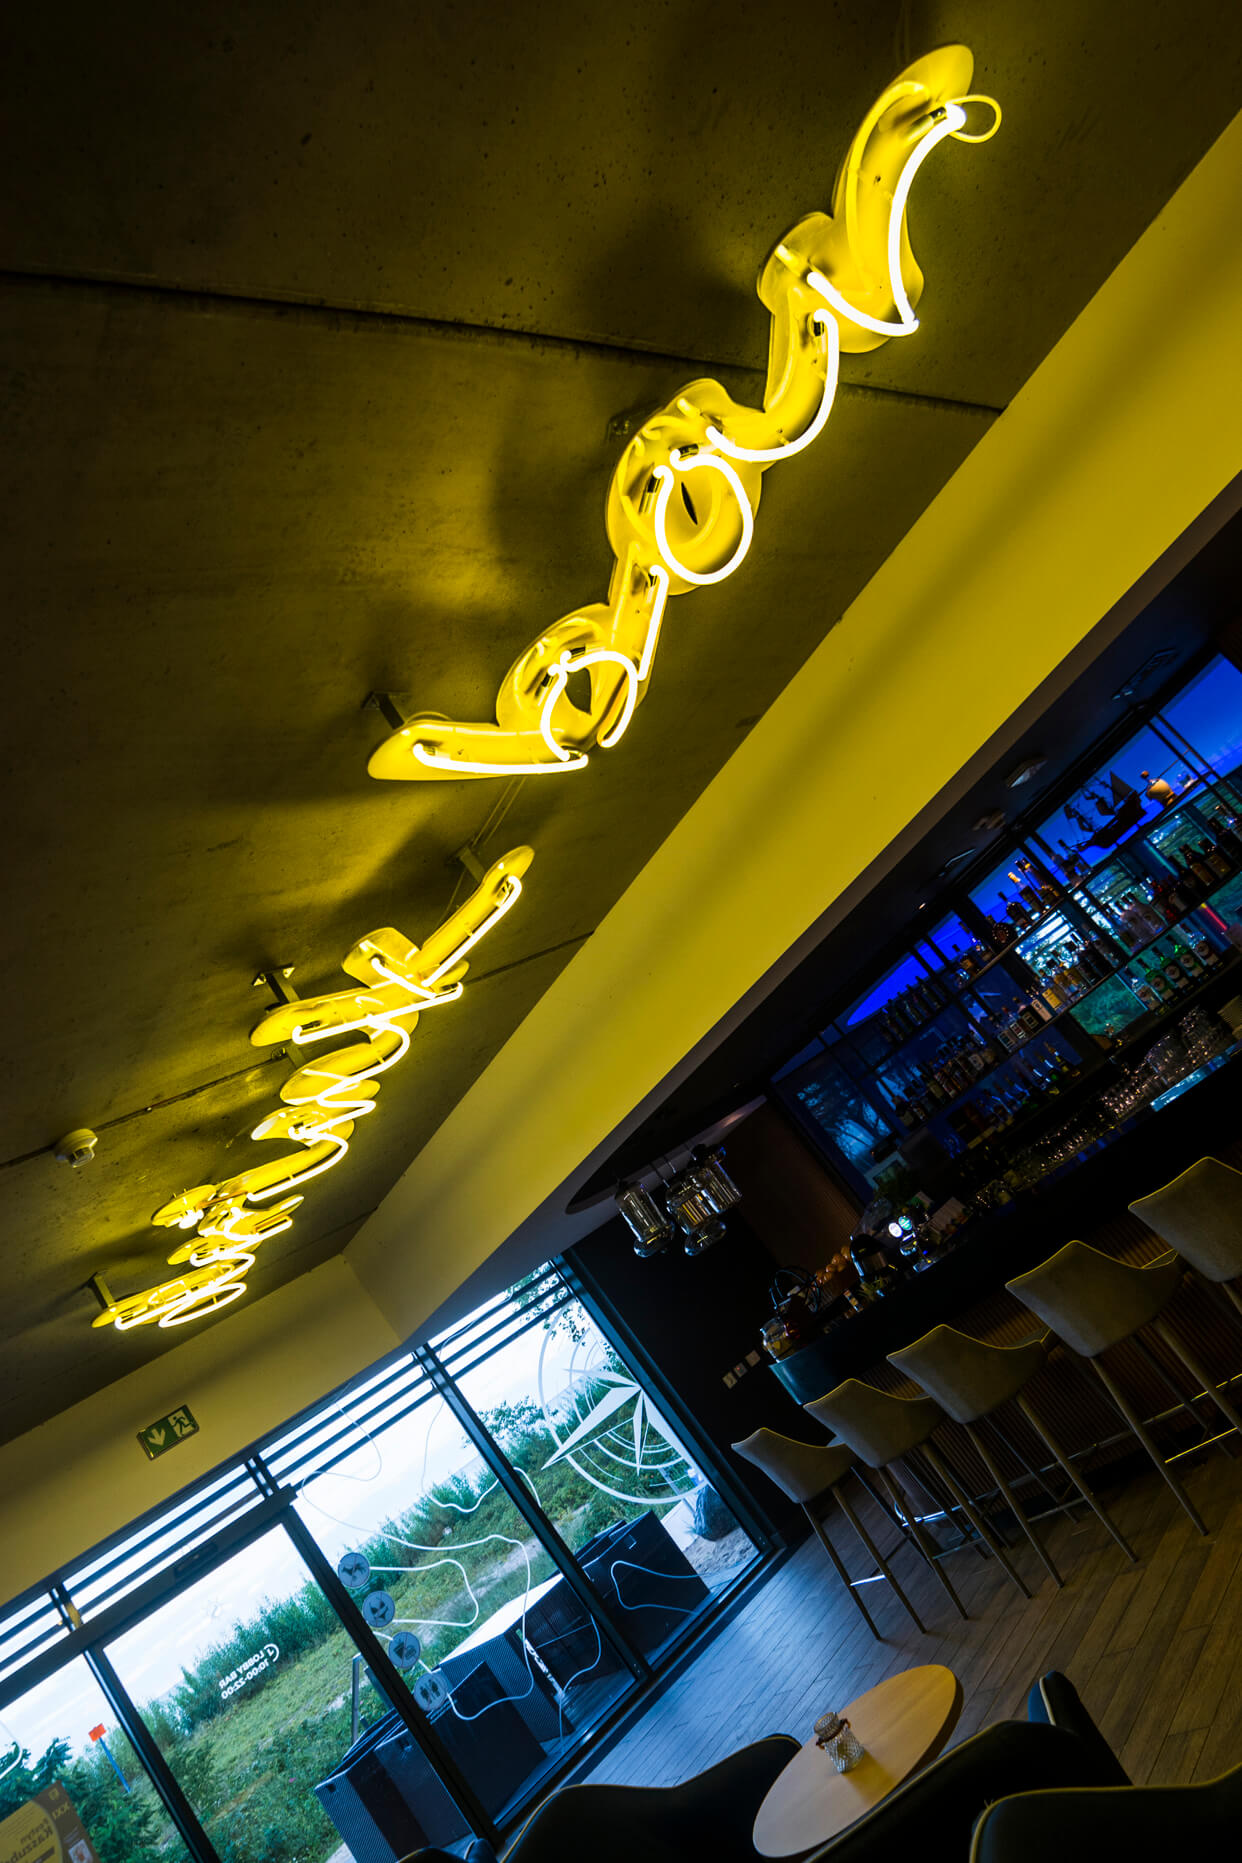 Drink Bar drinkbar - neon-drink-bar-zolty-neon-na-suficie-neon-mocowany-do-sufitu-neon-nad-głowami-neon-w-barze-na-suficie-neon-w-hotelu-neon-w-restauracji-hotelowej-neon-wewnatrz-hotelu-rewa